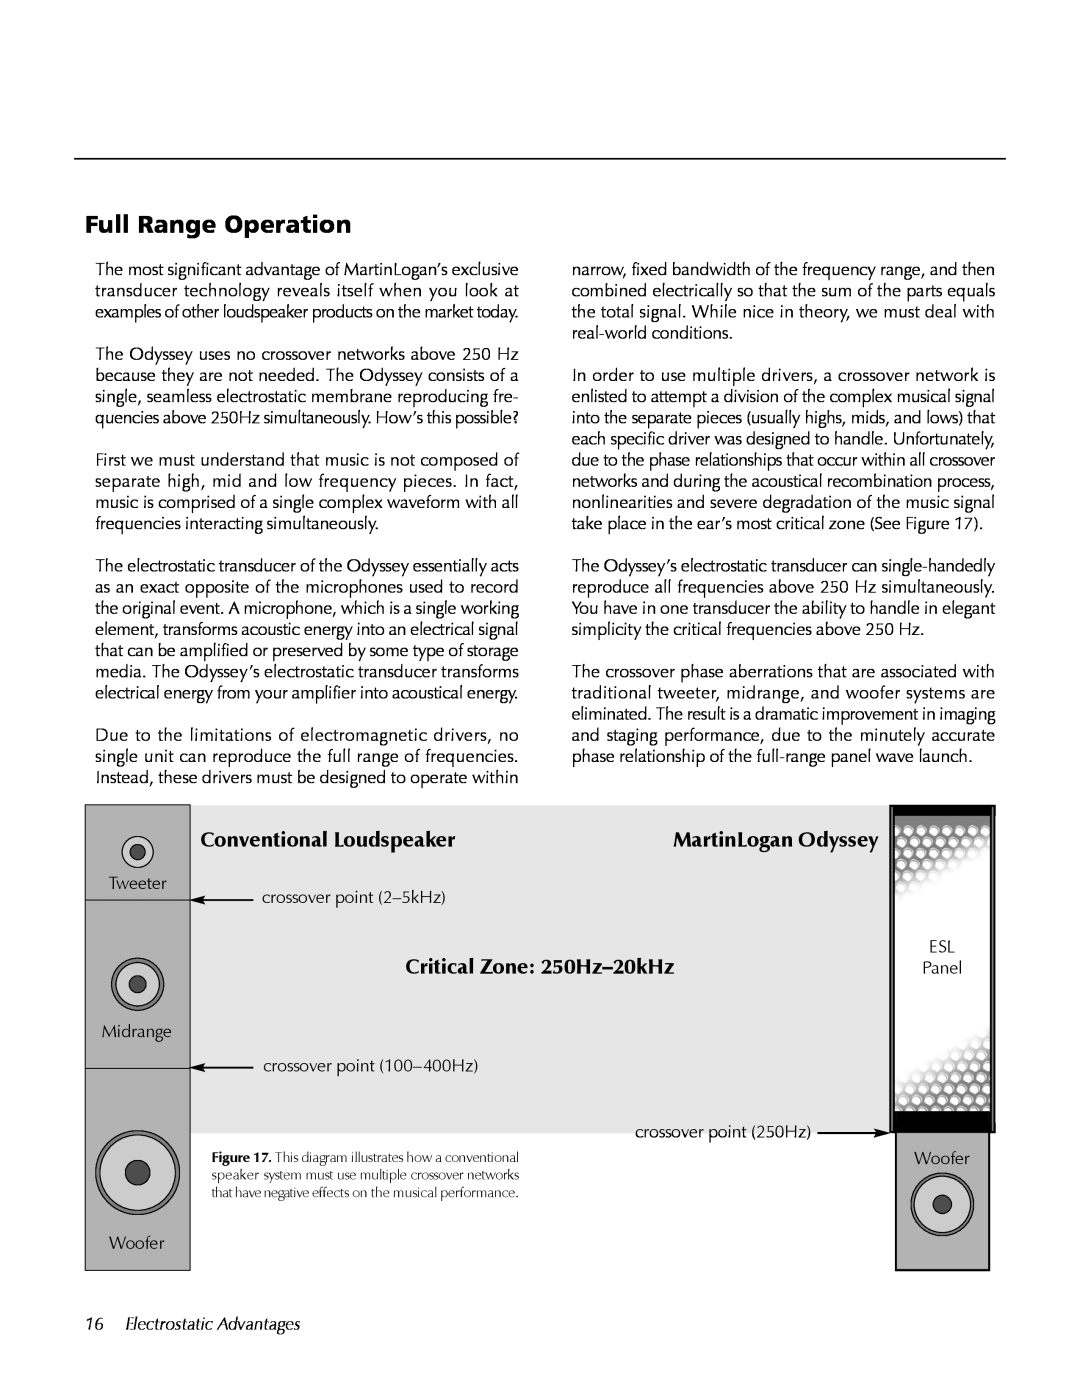 MartinLogan user manual Full Range Operation, Conventional Loudspeaker, MartinLogan Odyssey, Critical Zone: 250Hz–20kHz 